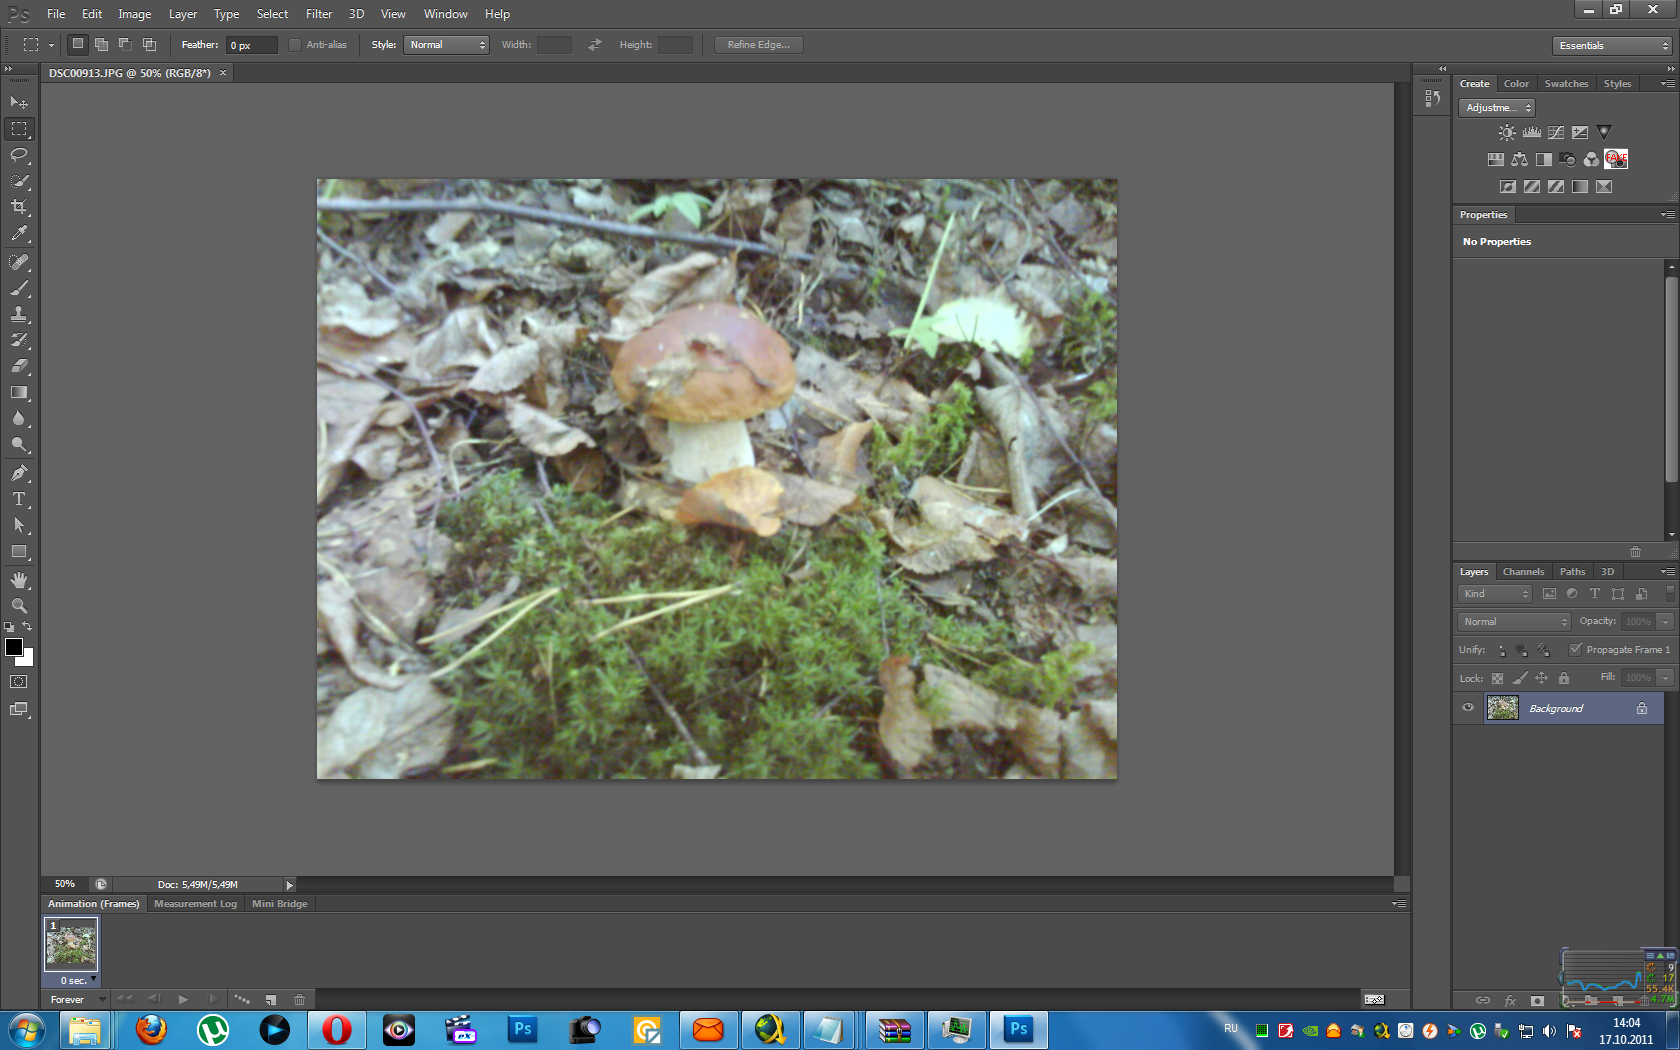 Adobe Photoshop CS6 Pre Release Portable RUS скачать бесплатно - Адобе фотошоп